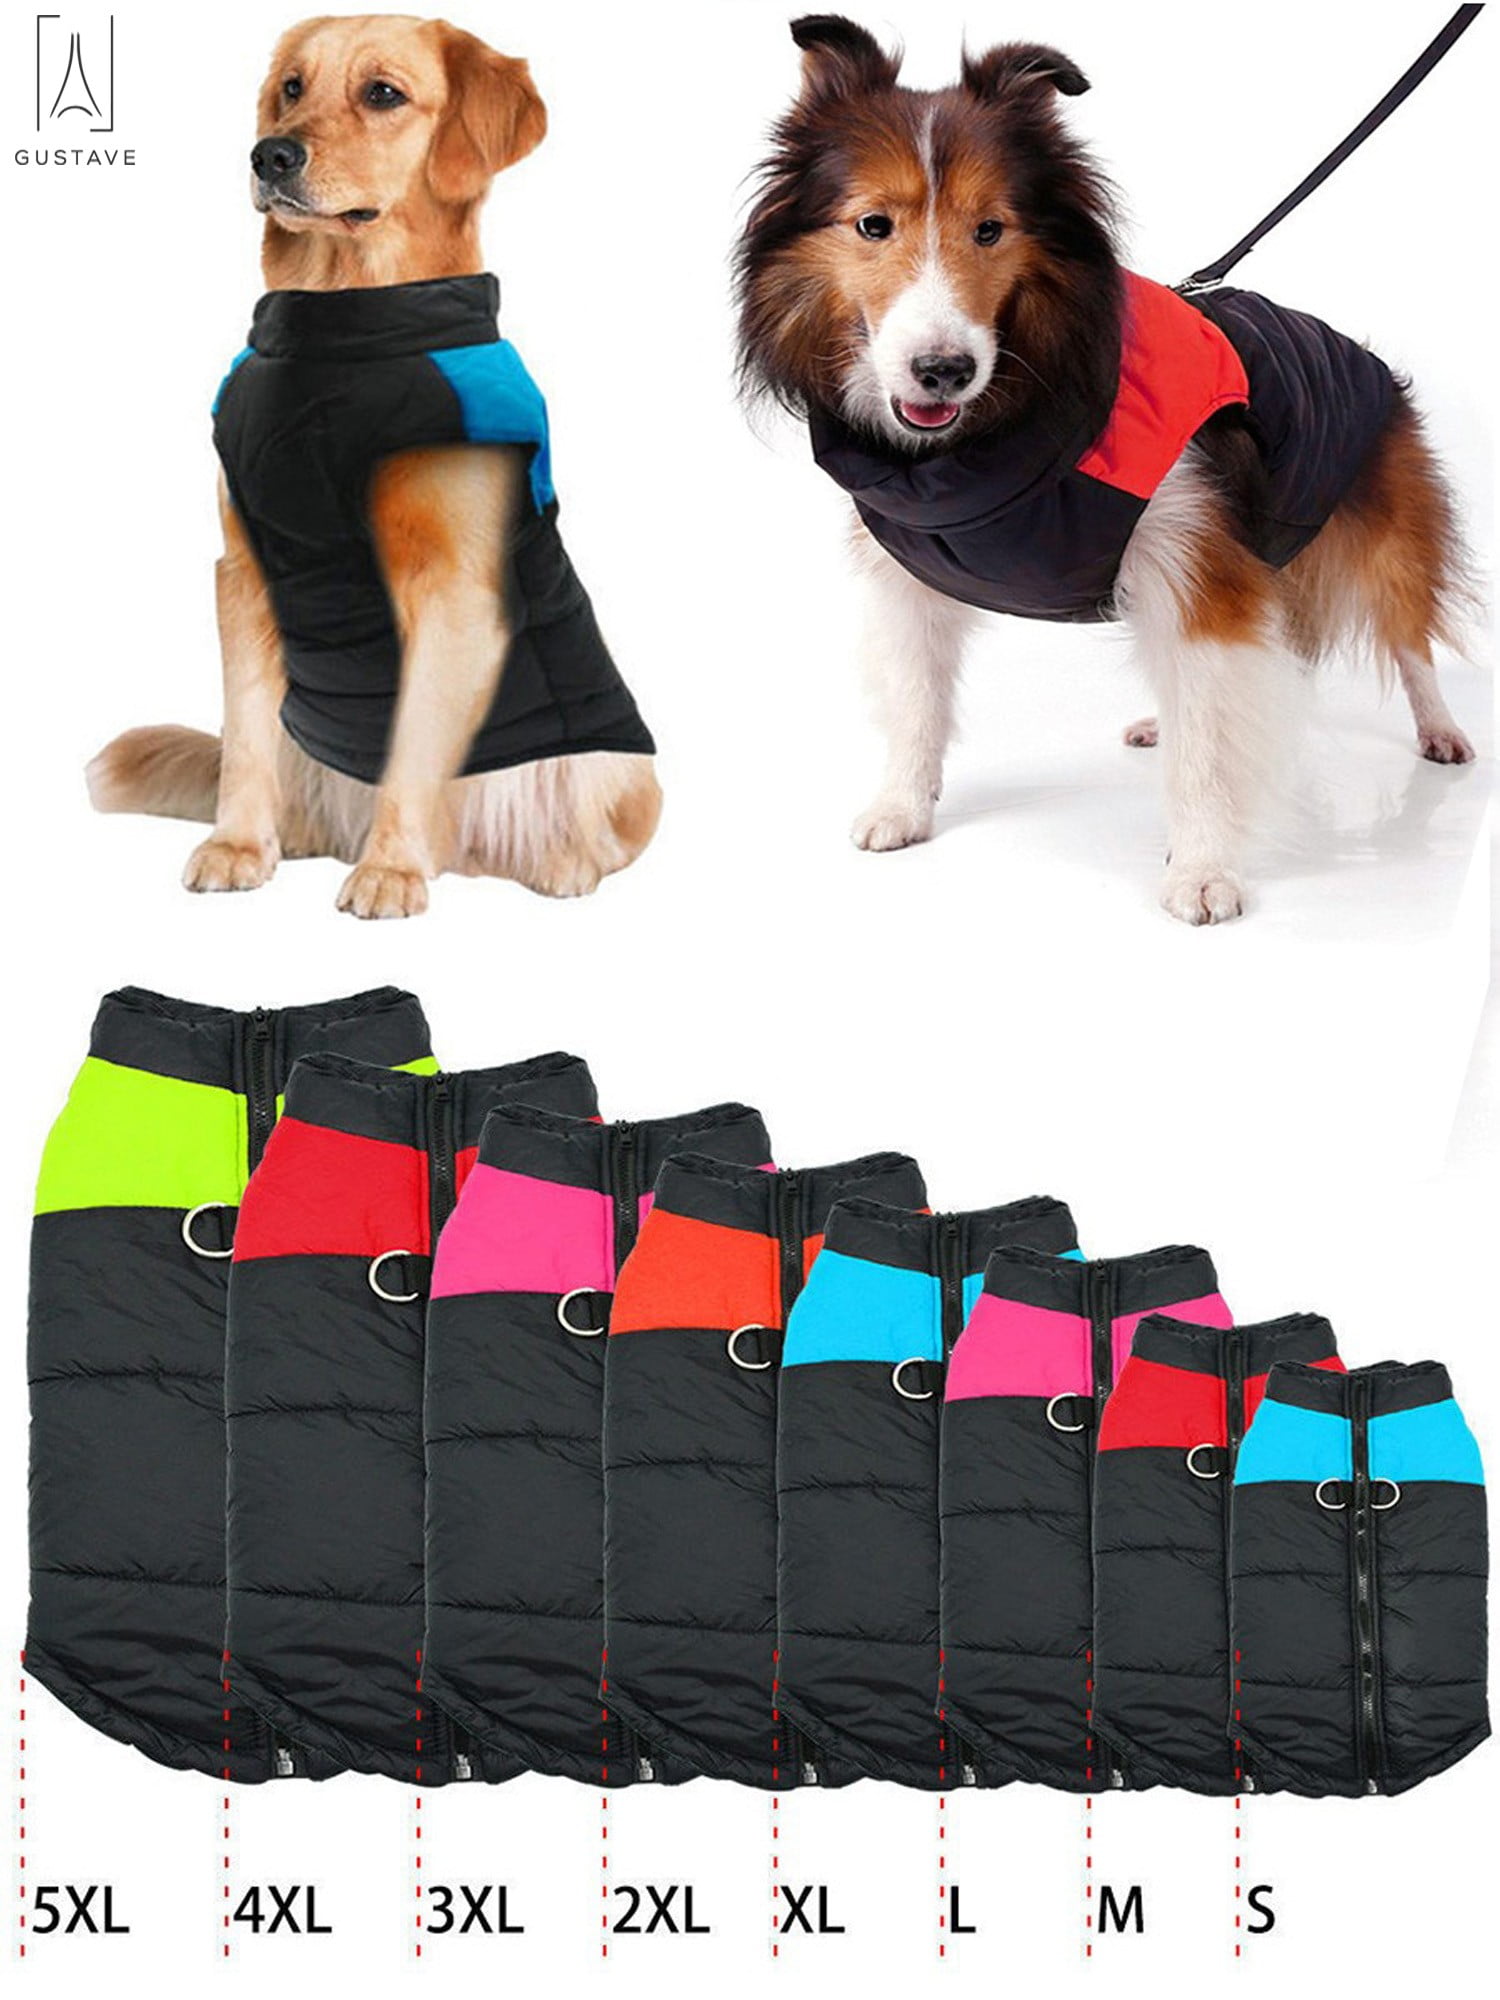 Beige Luxurious Dog Winter Coat Top quality chic dog winter jacket* Warm stylish jacket for small dogs* Bestseller!* Awesome dog coat